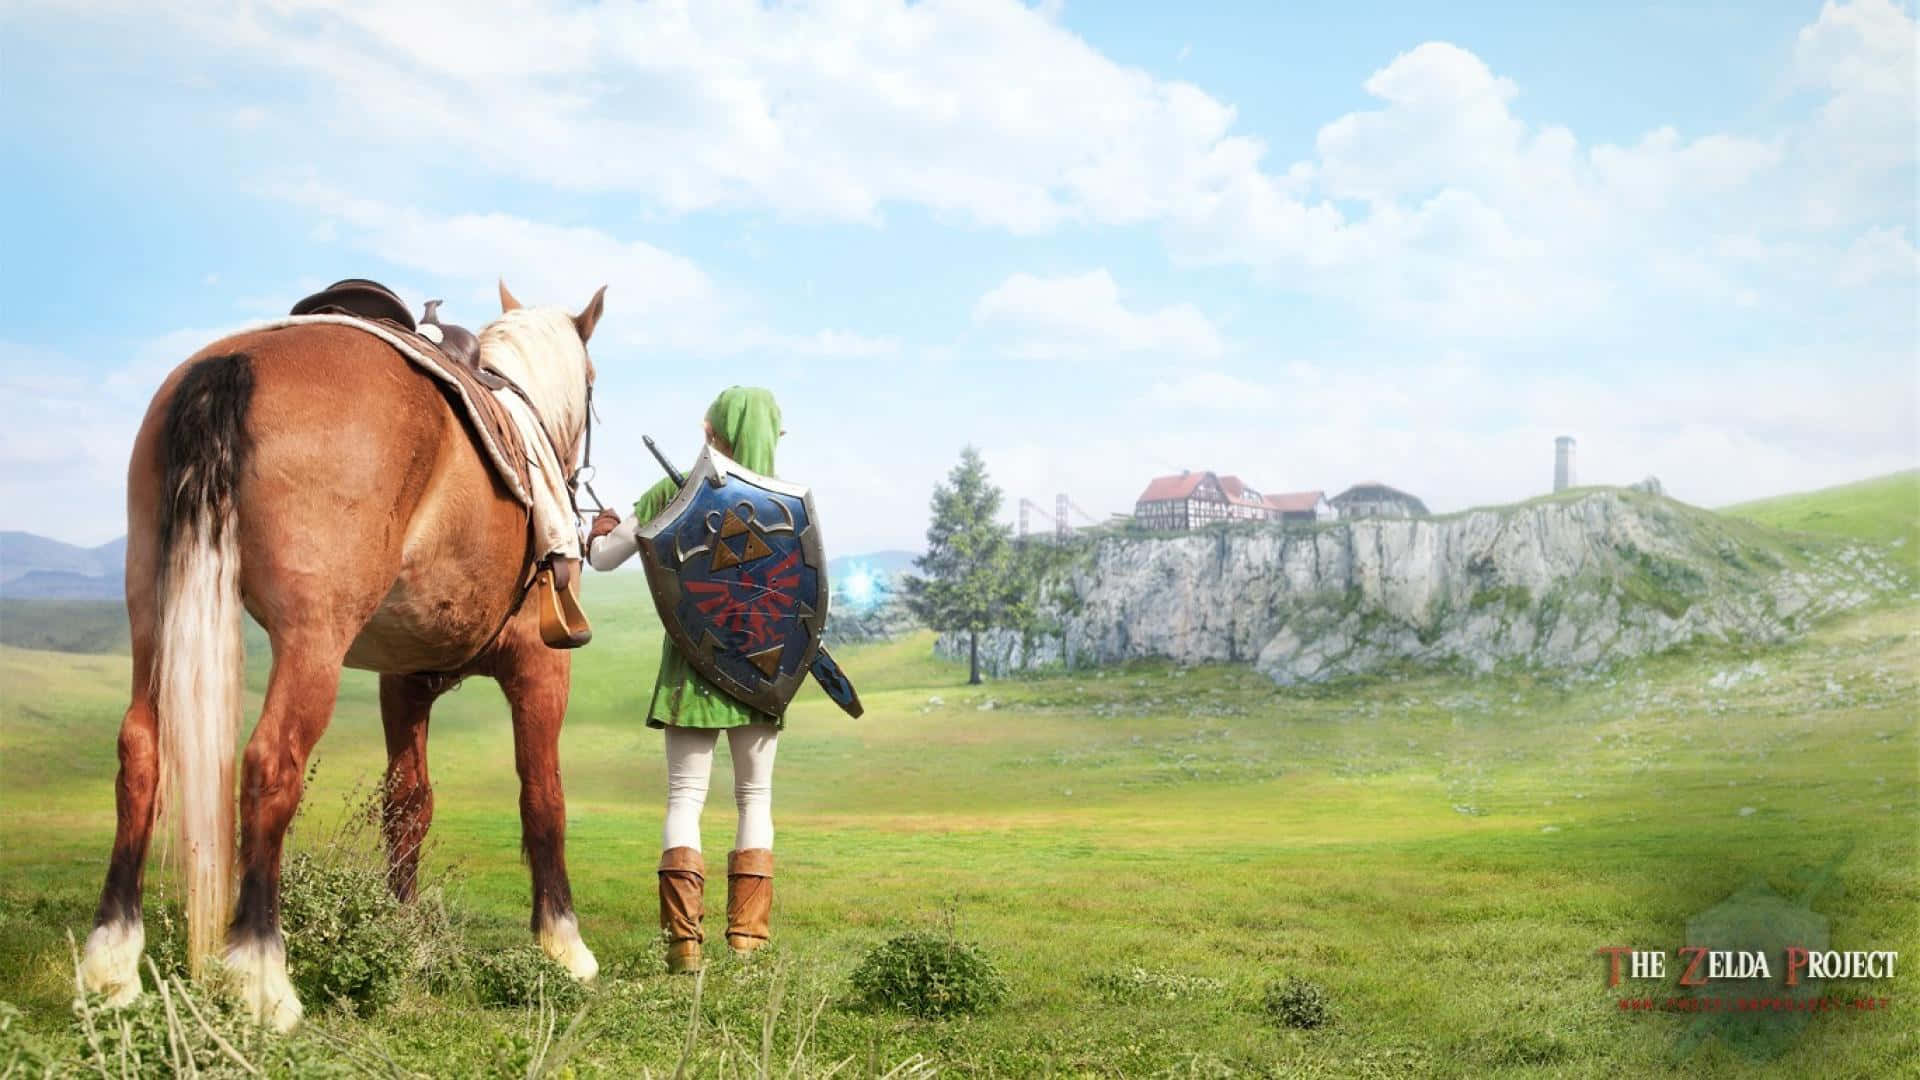 The Legend of Zelda: Link riding Epona through Hyrule Field Wallpaper